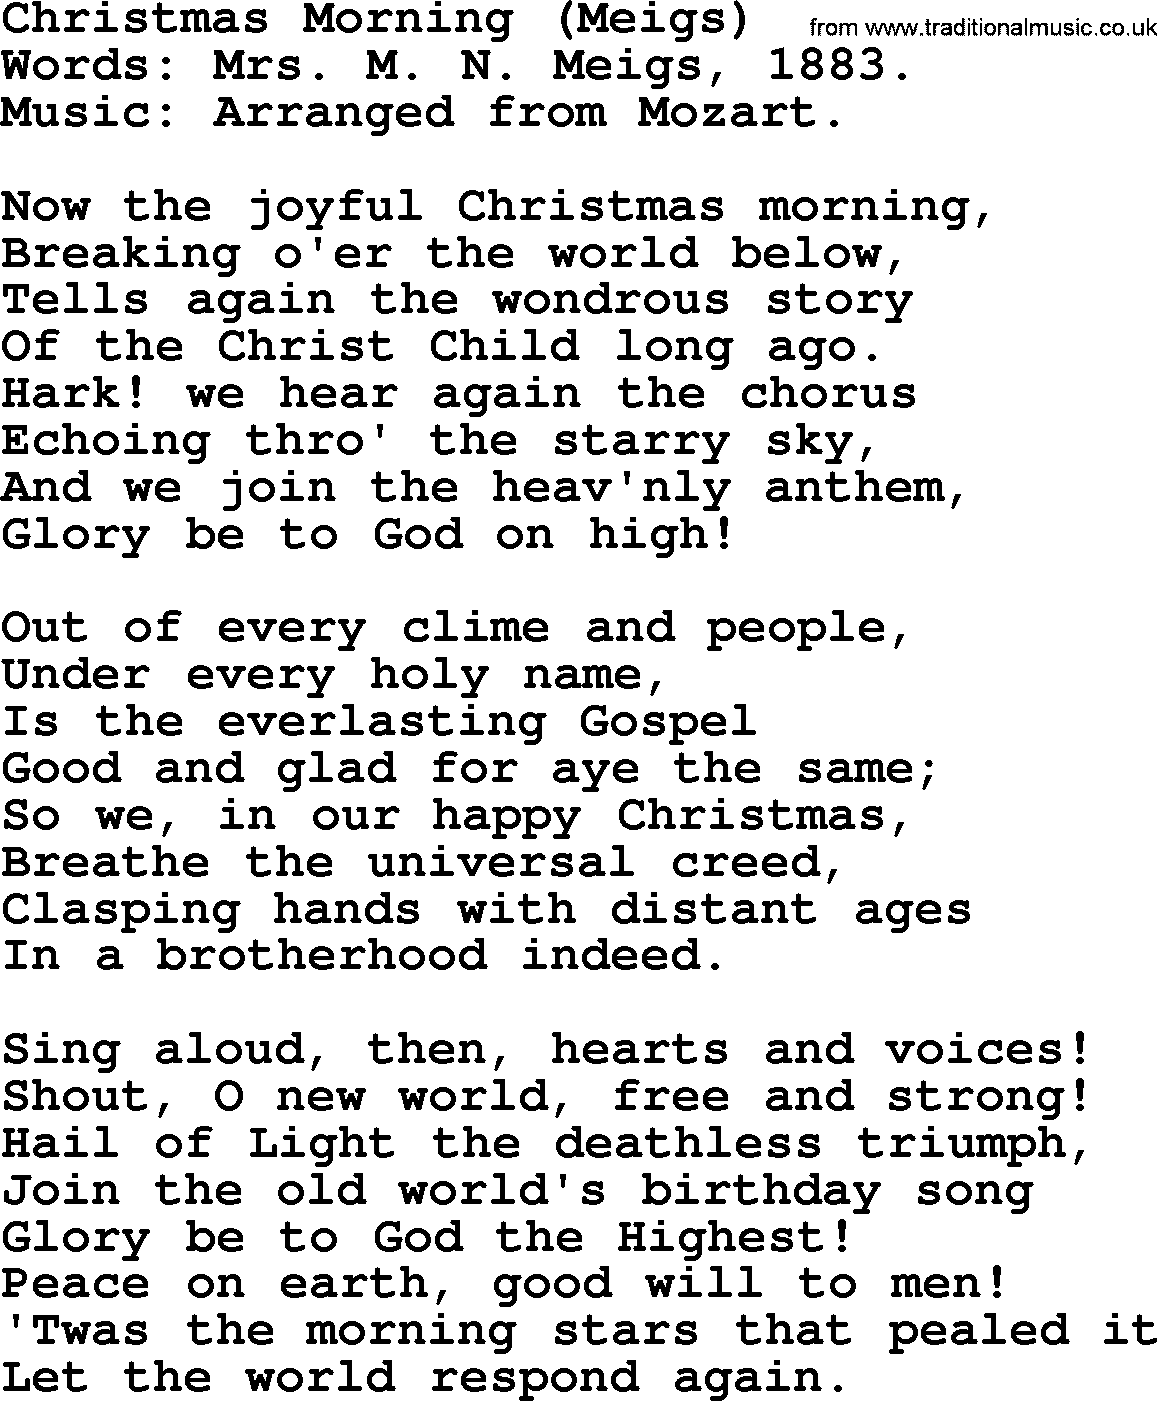 Christmas Hymns, Carols and Songs, title: Christmas Morning (meigs), lyrics with PDF